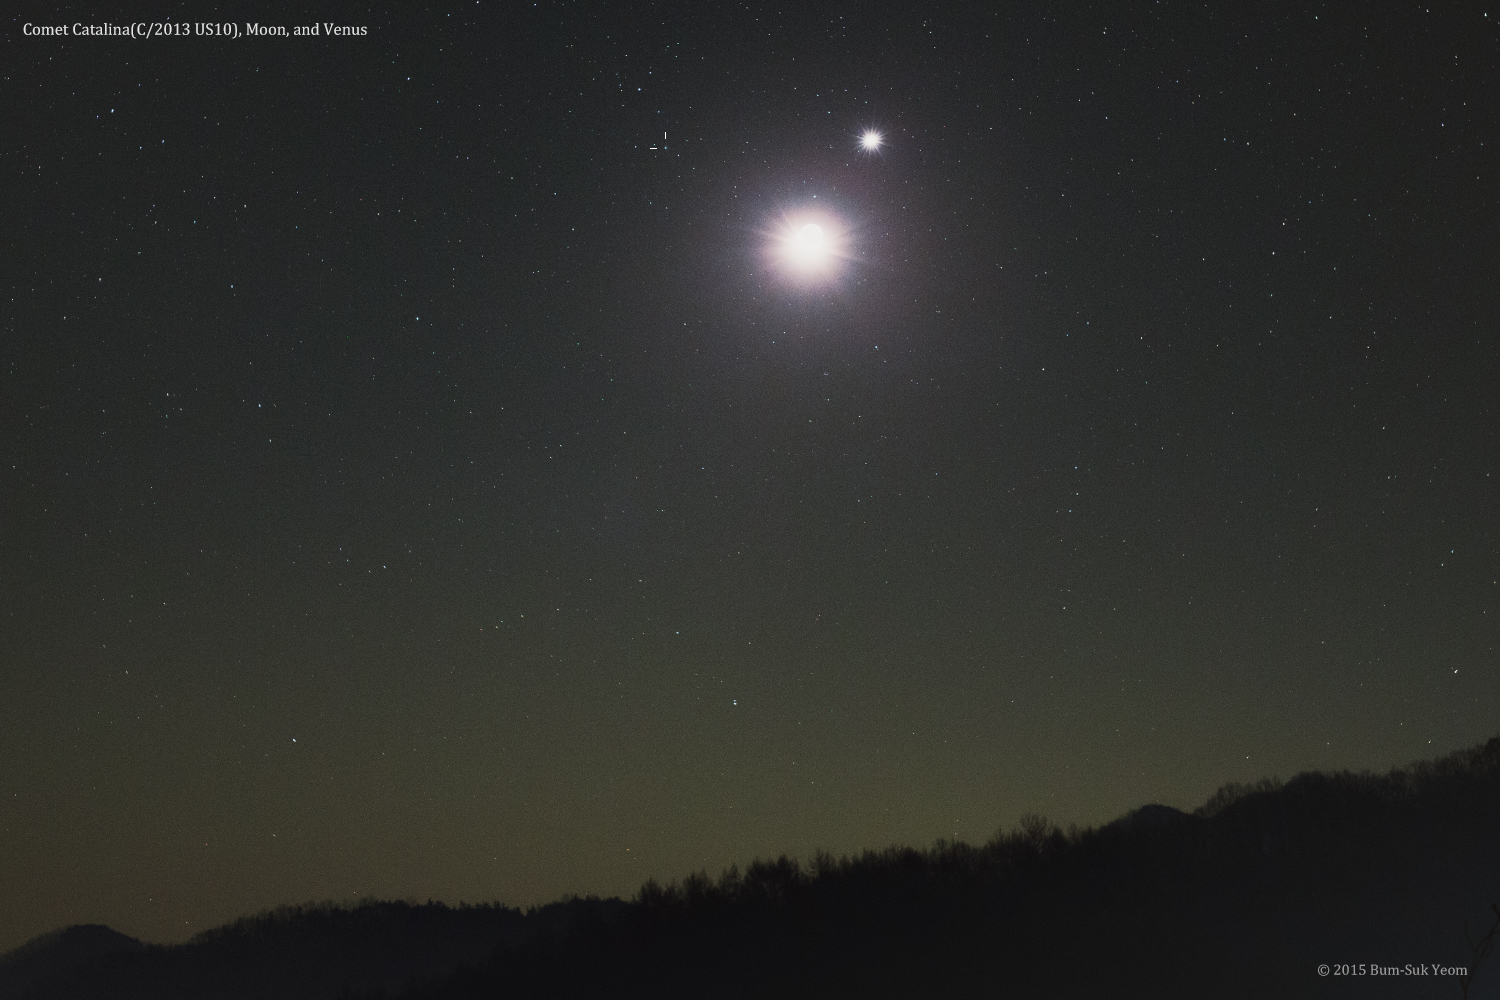 comet_catalina_c2013us10_moon_venus_02_web_bsyeom.jpg